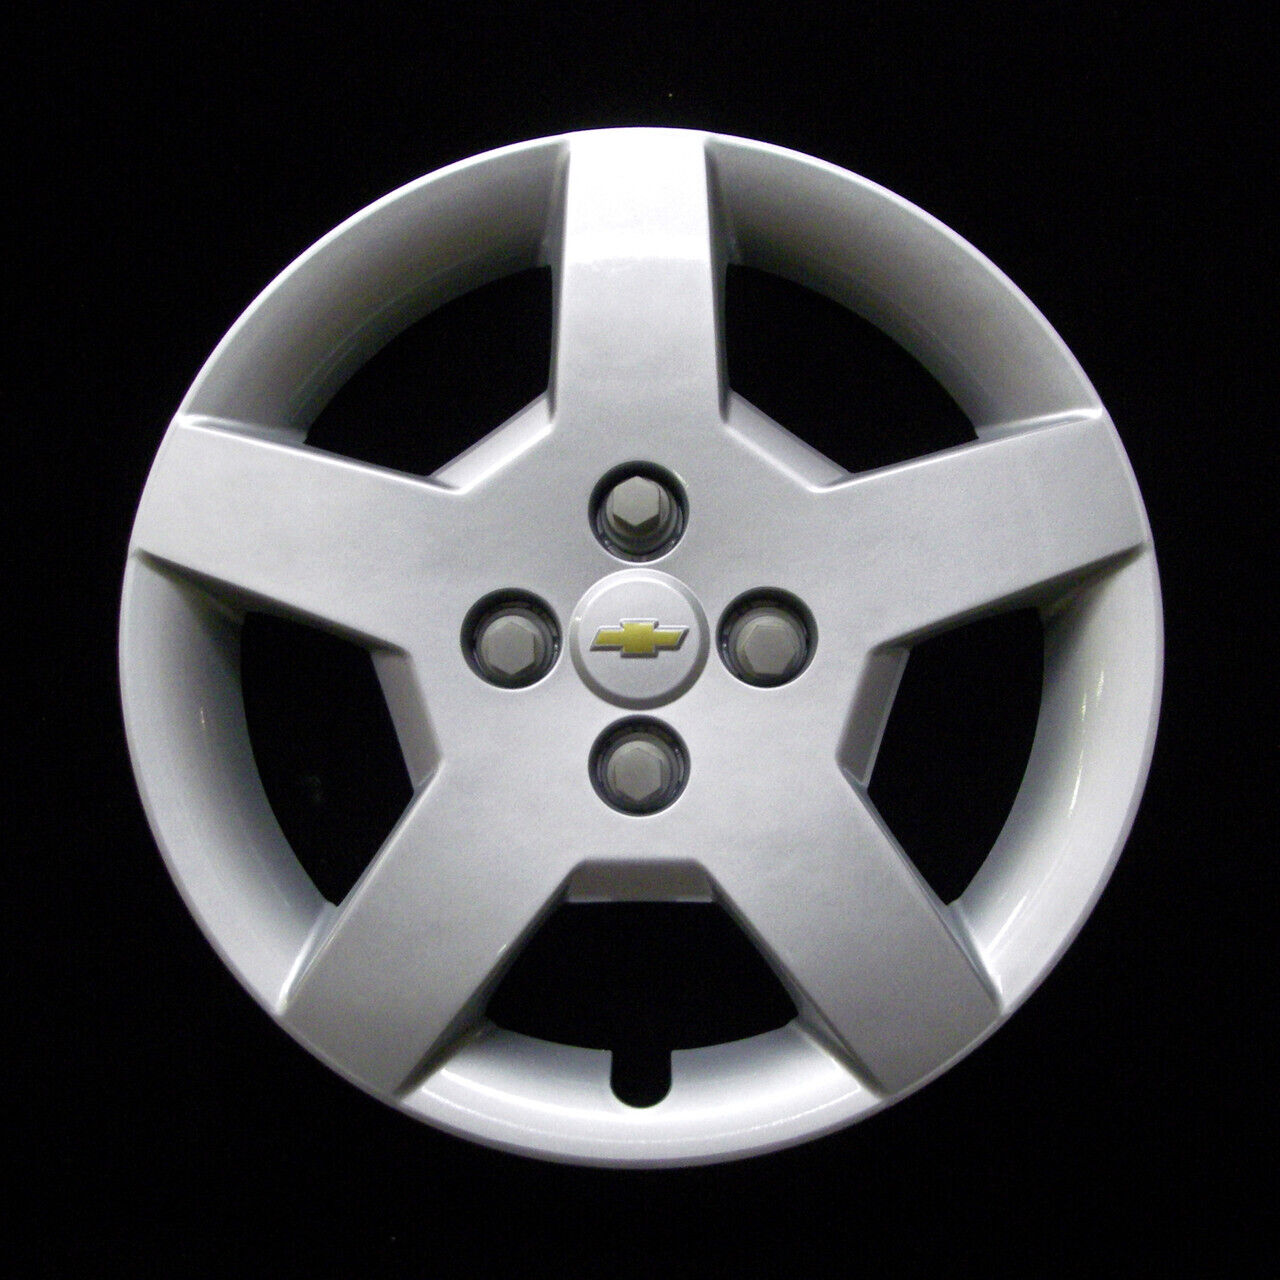 Hubcap for Chevrolet Cobalt 2005-2008 Genuine GM Factory OEM 3247 Wheel Cover